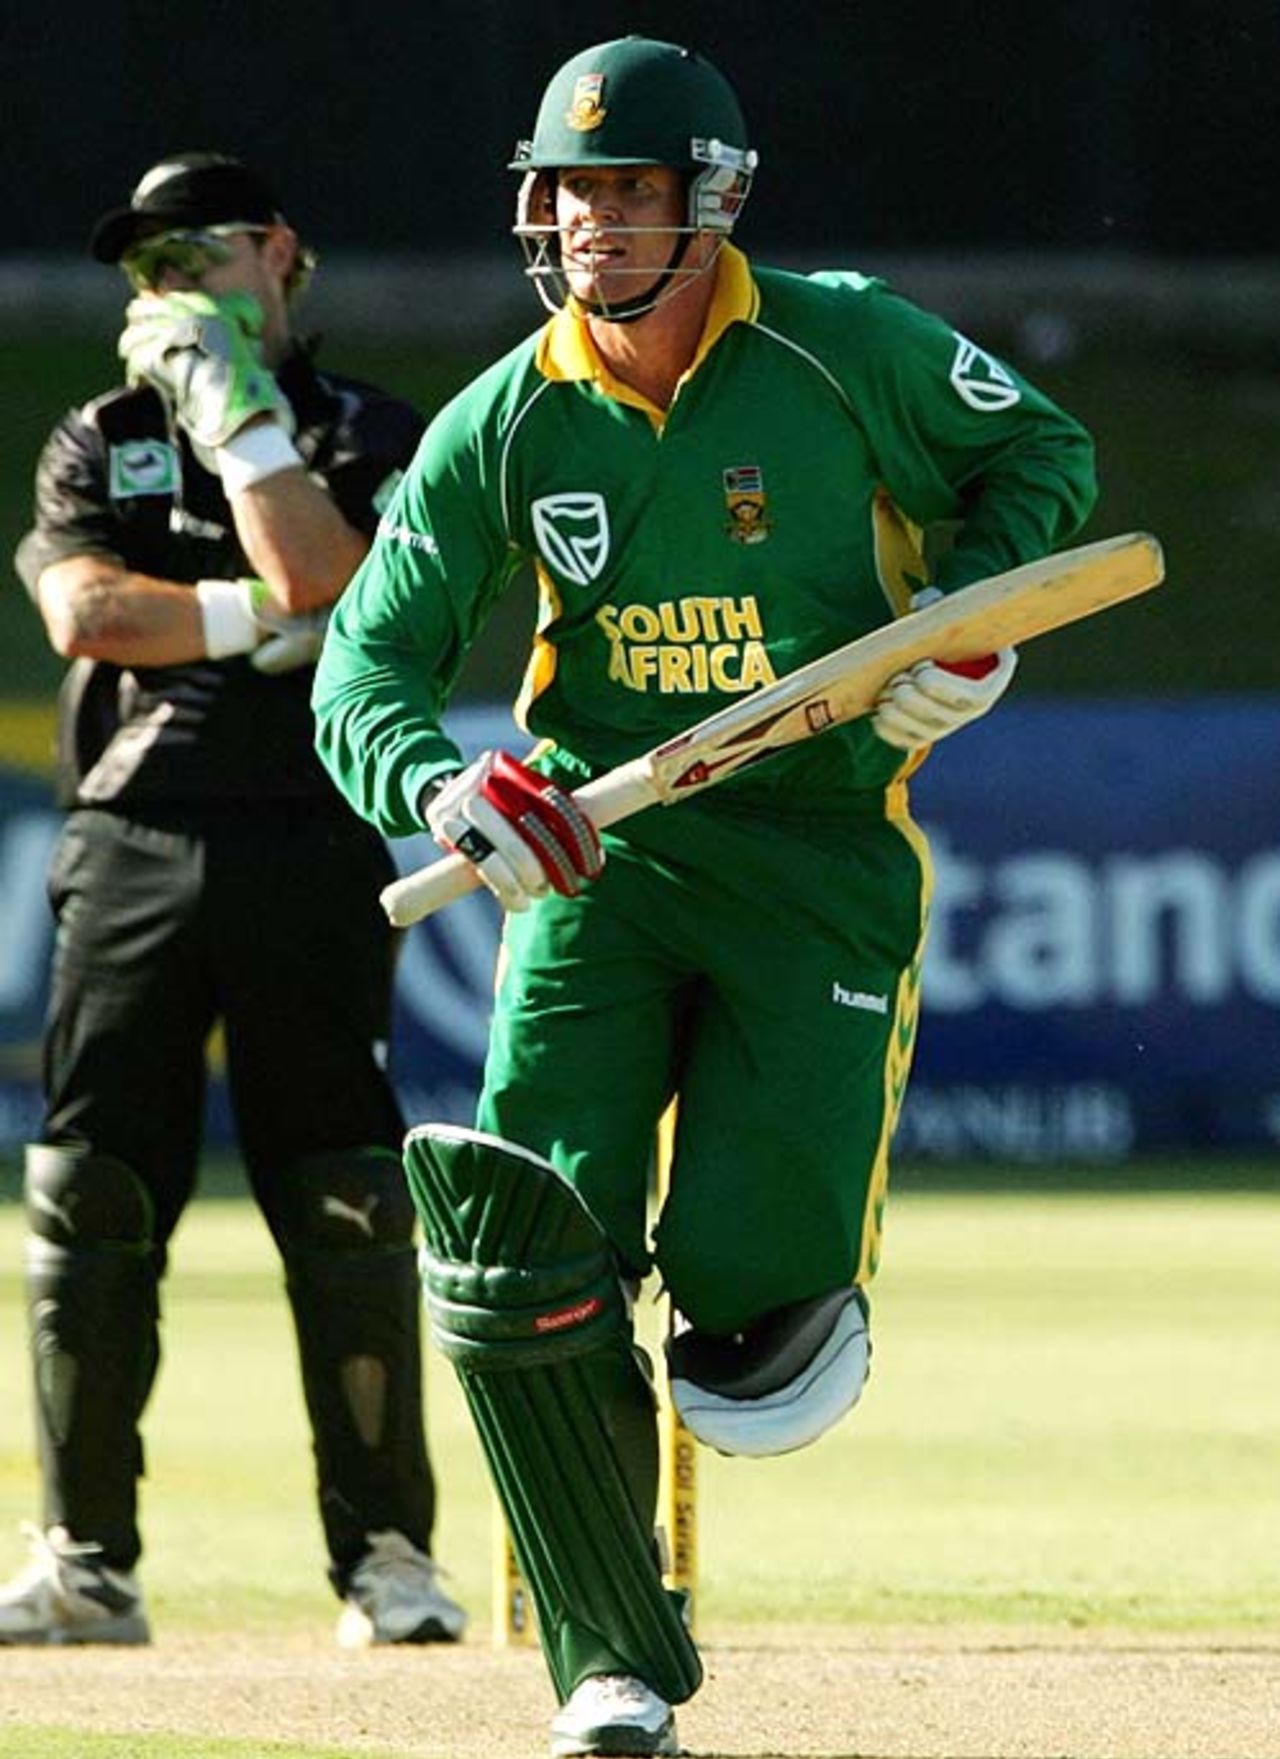 Shaun Pollock takes a run as Brendon McCullum looks on, South Africa v New Zealand, 2nd ODI, Port Elizabeth, November 30, 2007